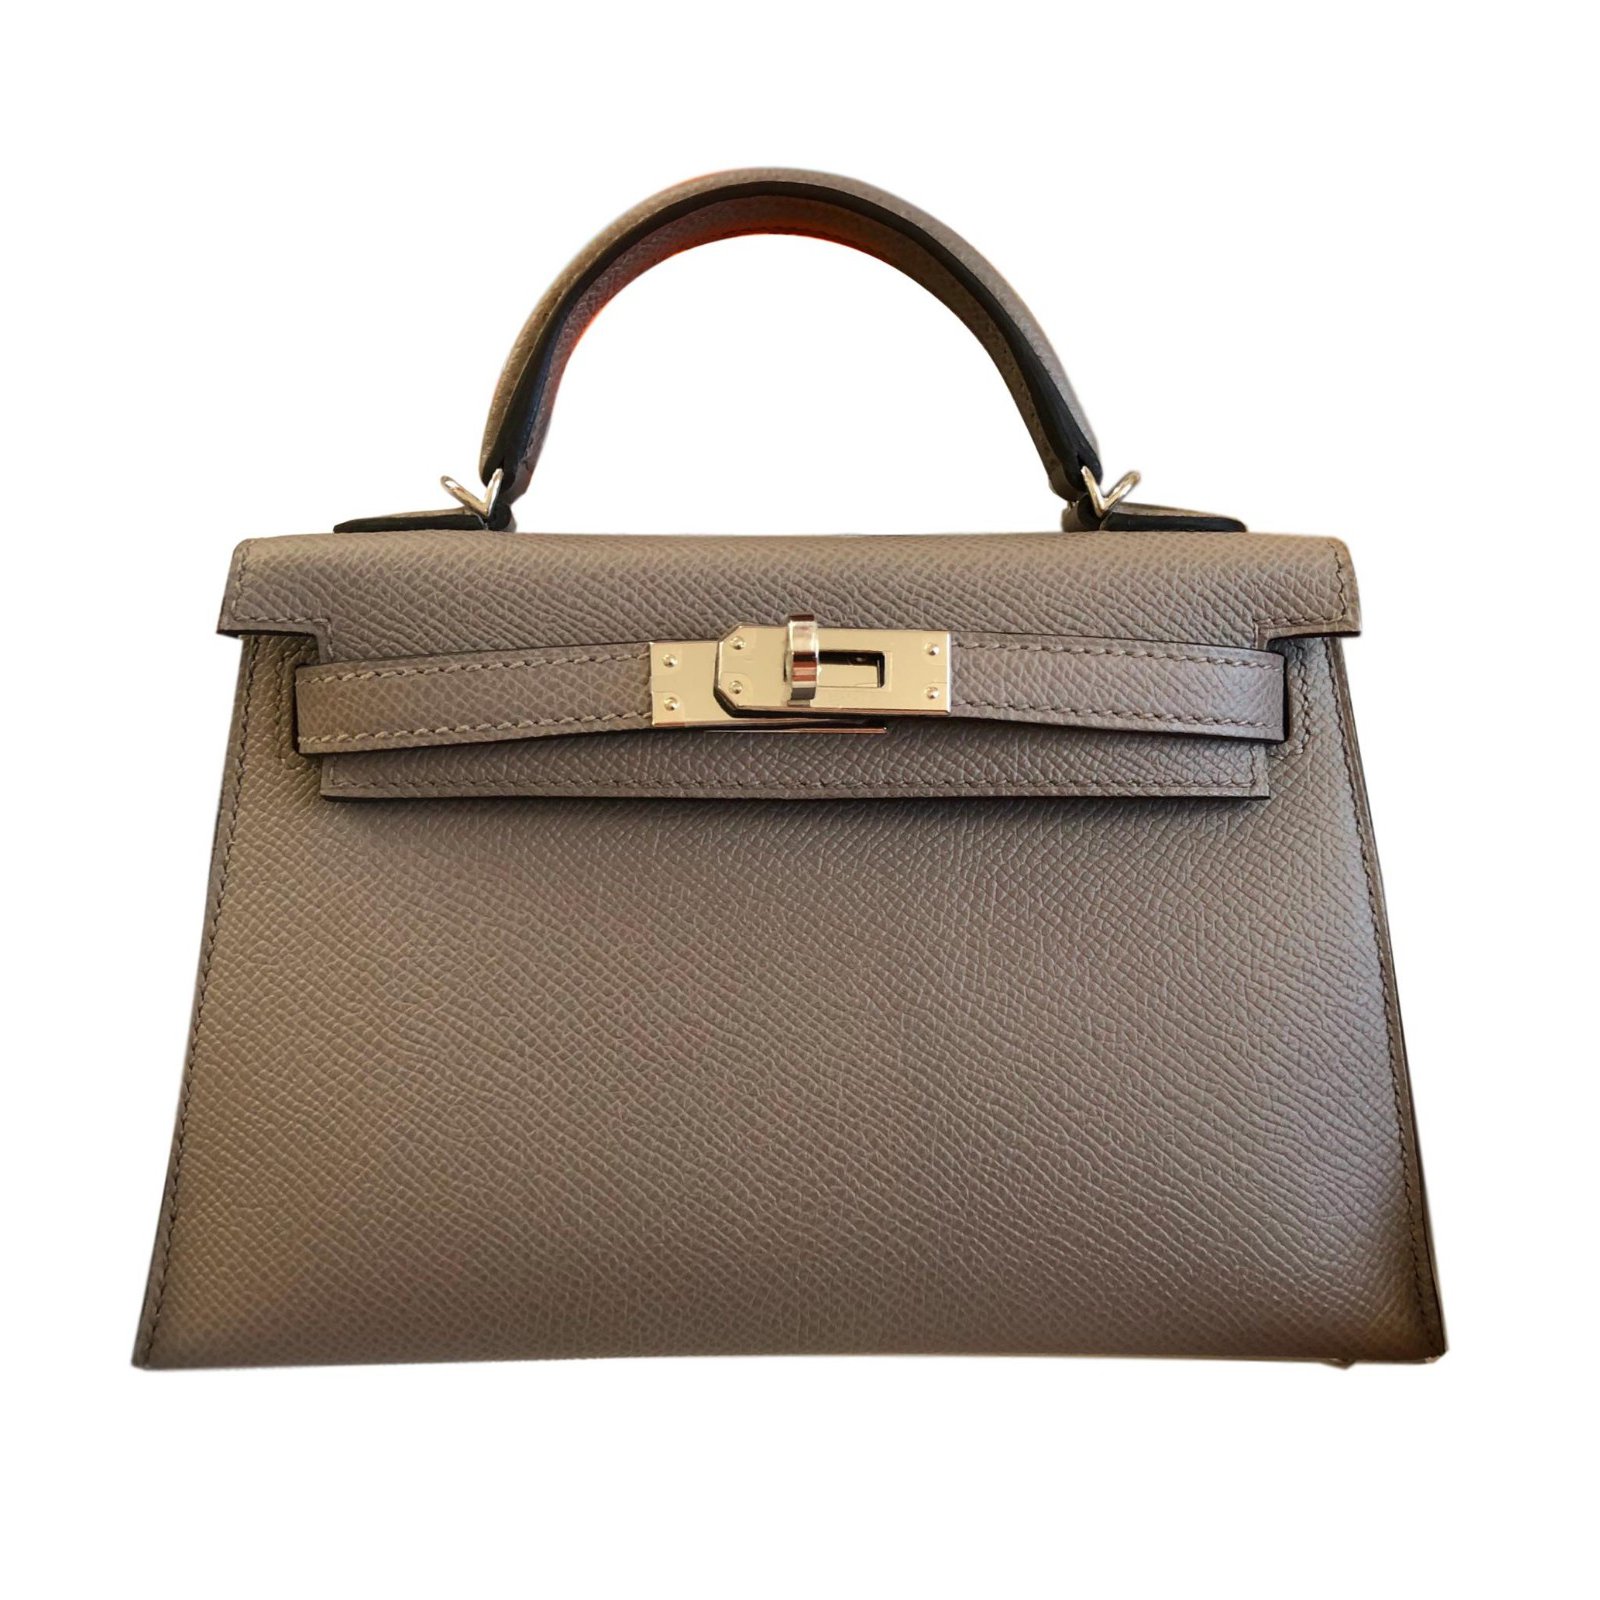 Herm s Mini  Kelly  II Handbags Leather Grey ref 73253 